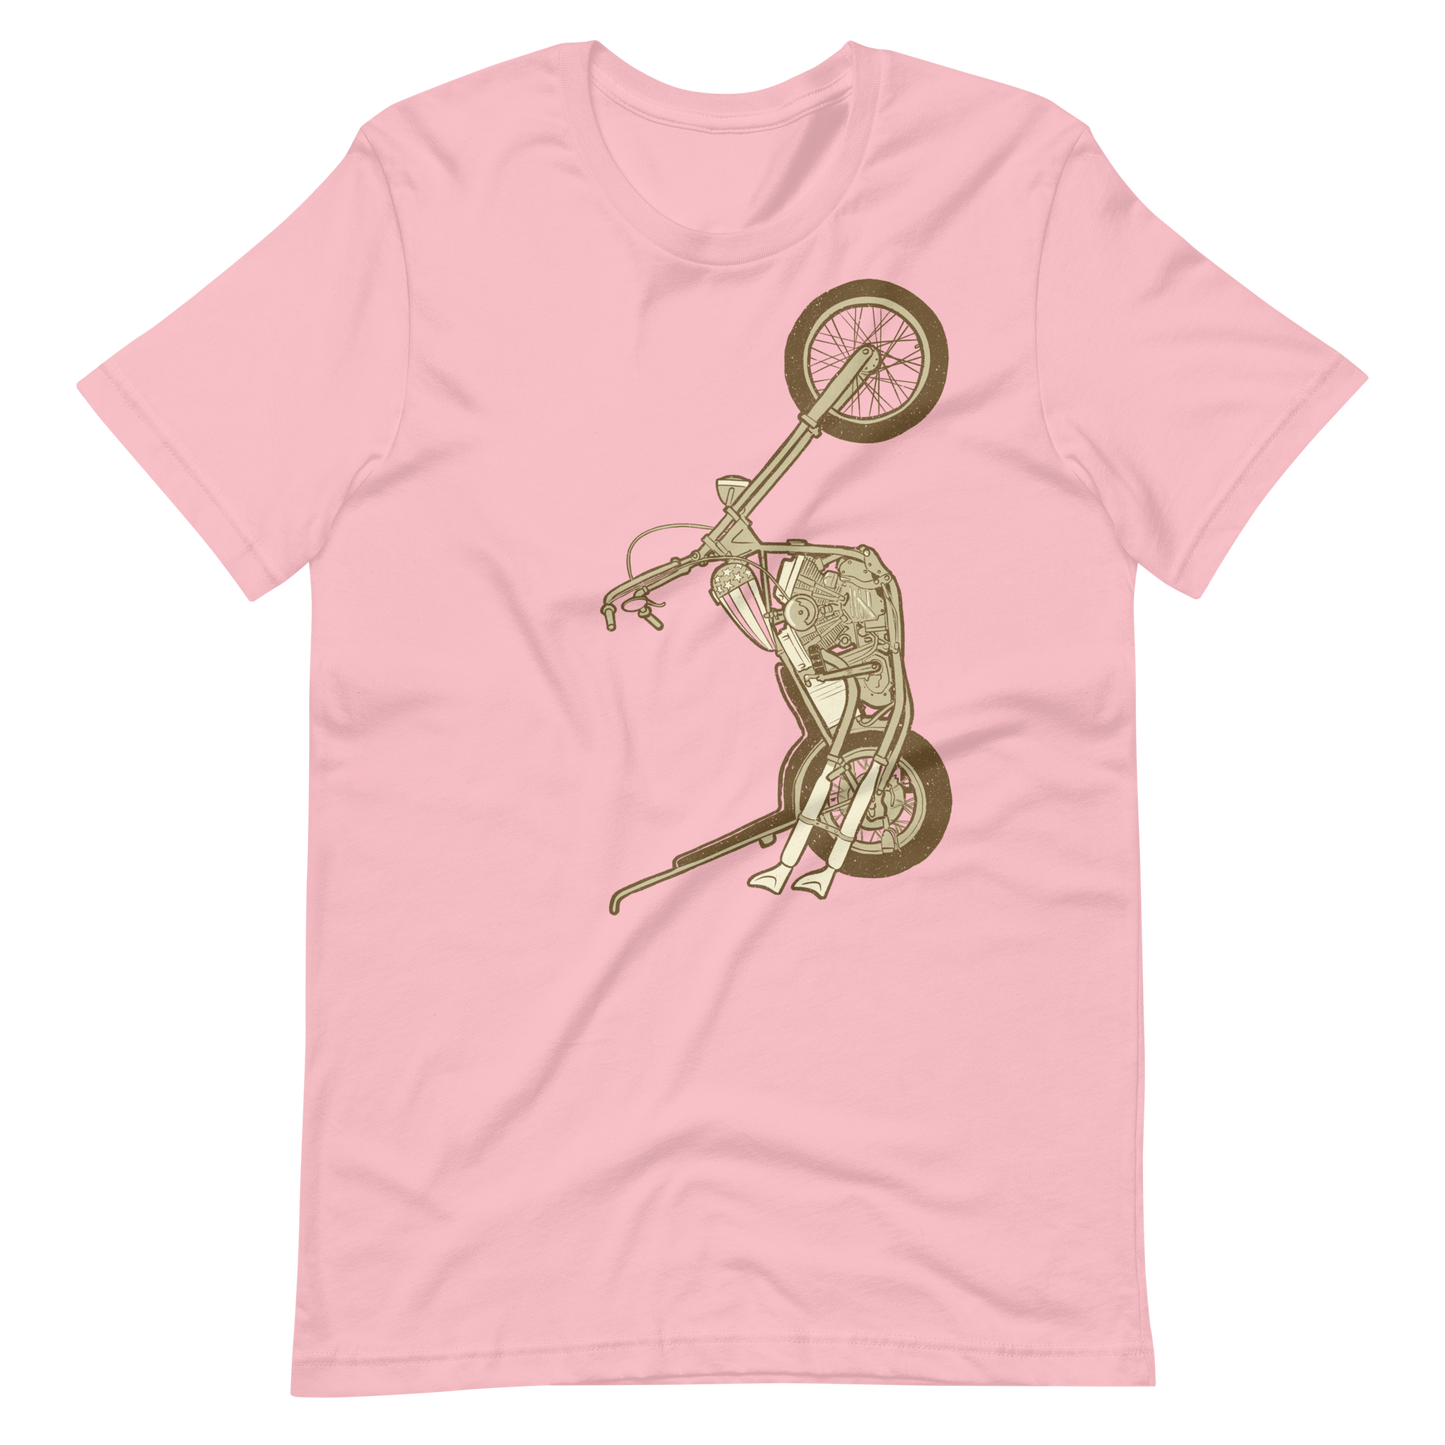 pink  Easy Rider Harley T-shirt Peter Fonda Shirt Harley Biker Shirt For Harley Lovers Vintage Motorcycle Shirt Road Trip Tourer Shirt Biker Shirt